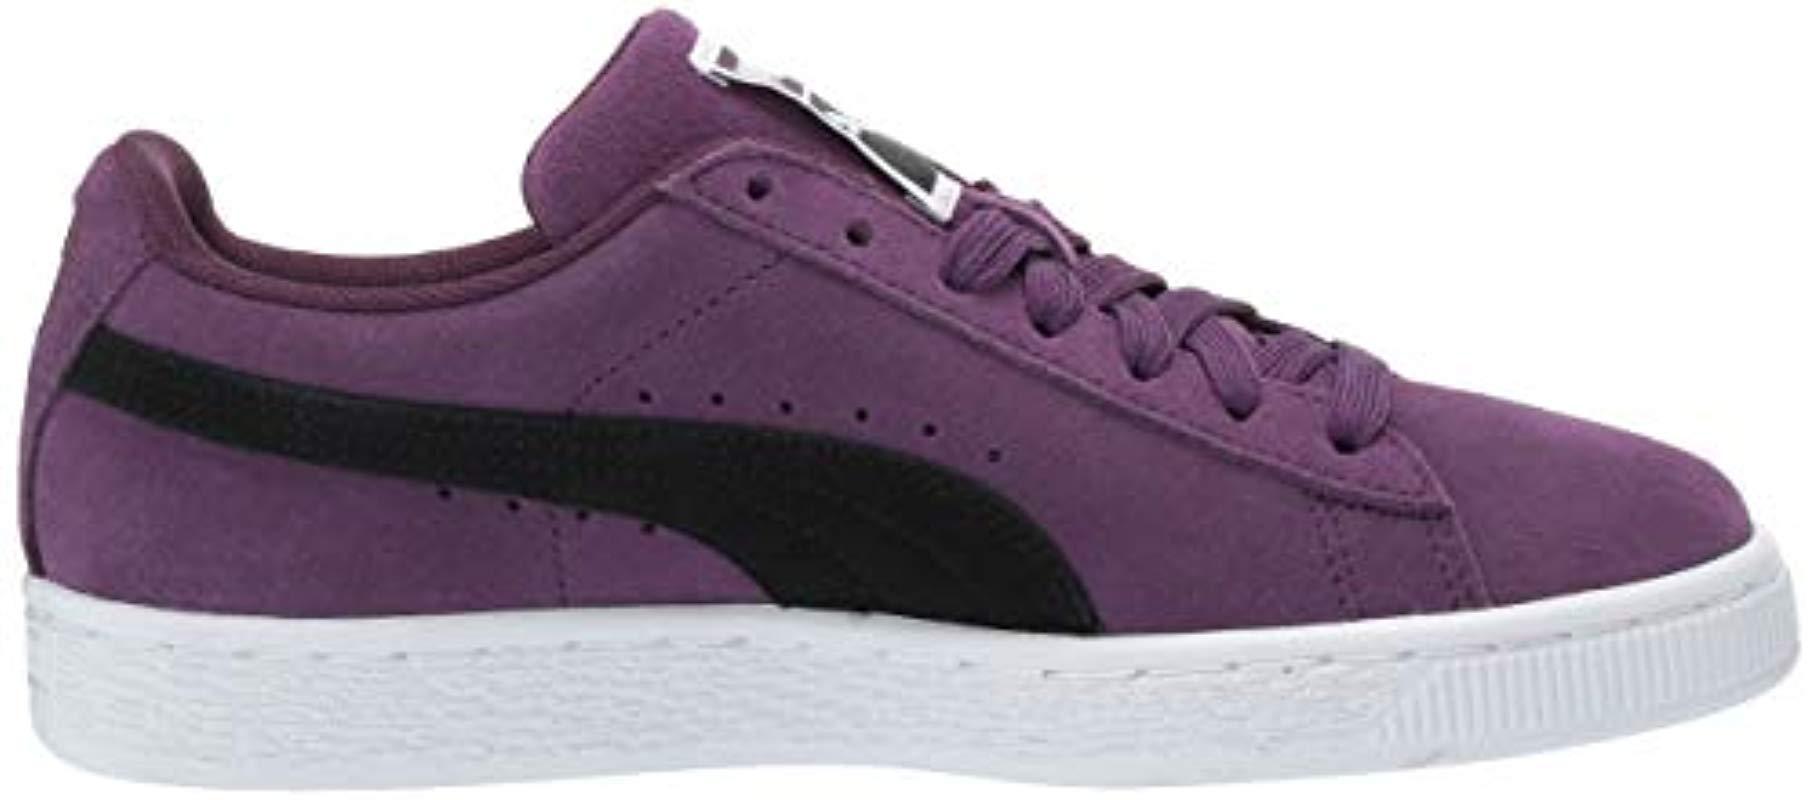 PUMA Suede Classic Sneaker in Purple for Men - Lyst